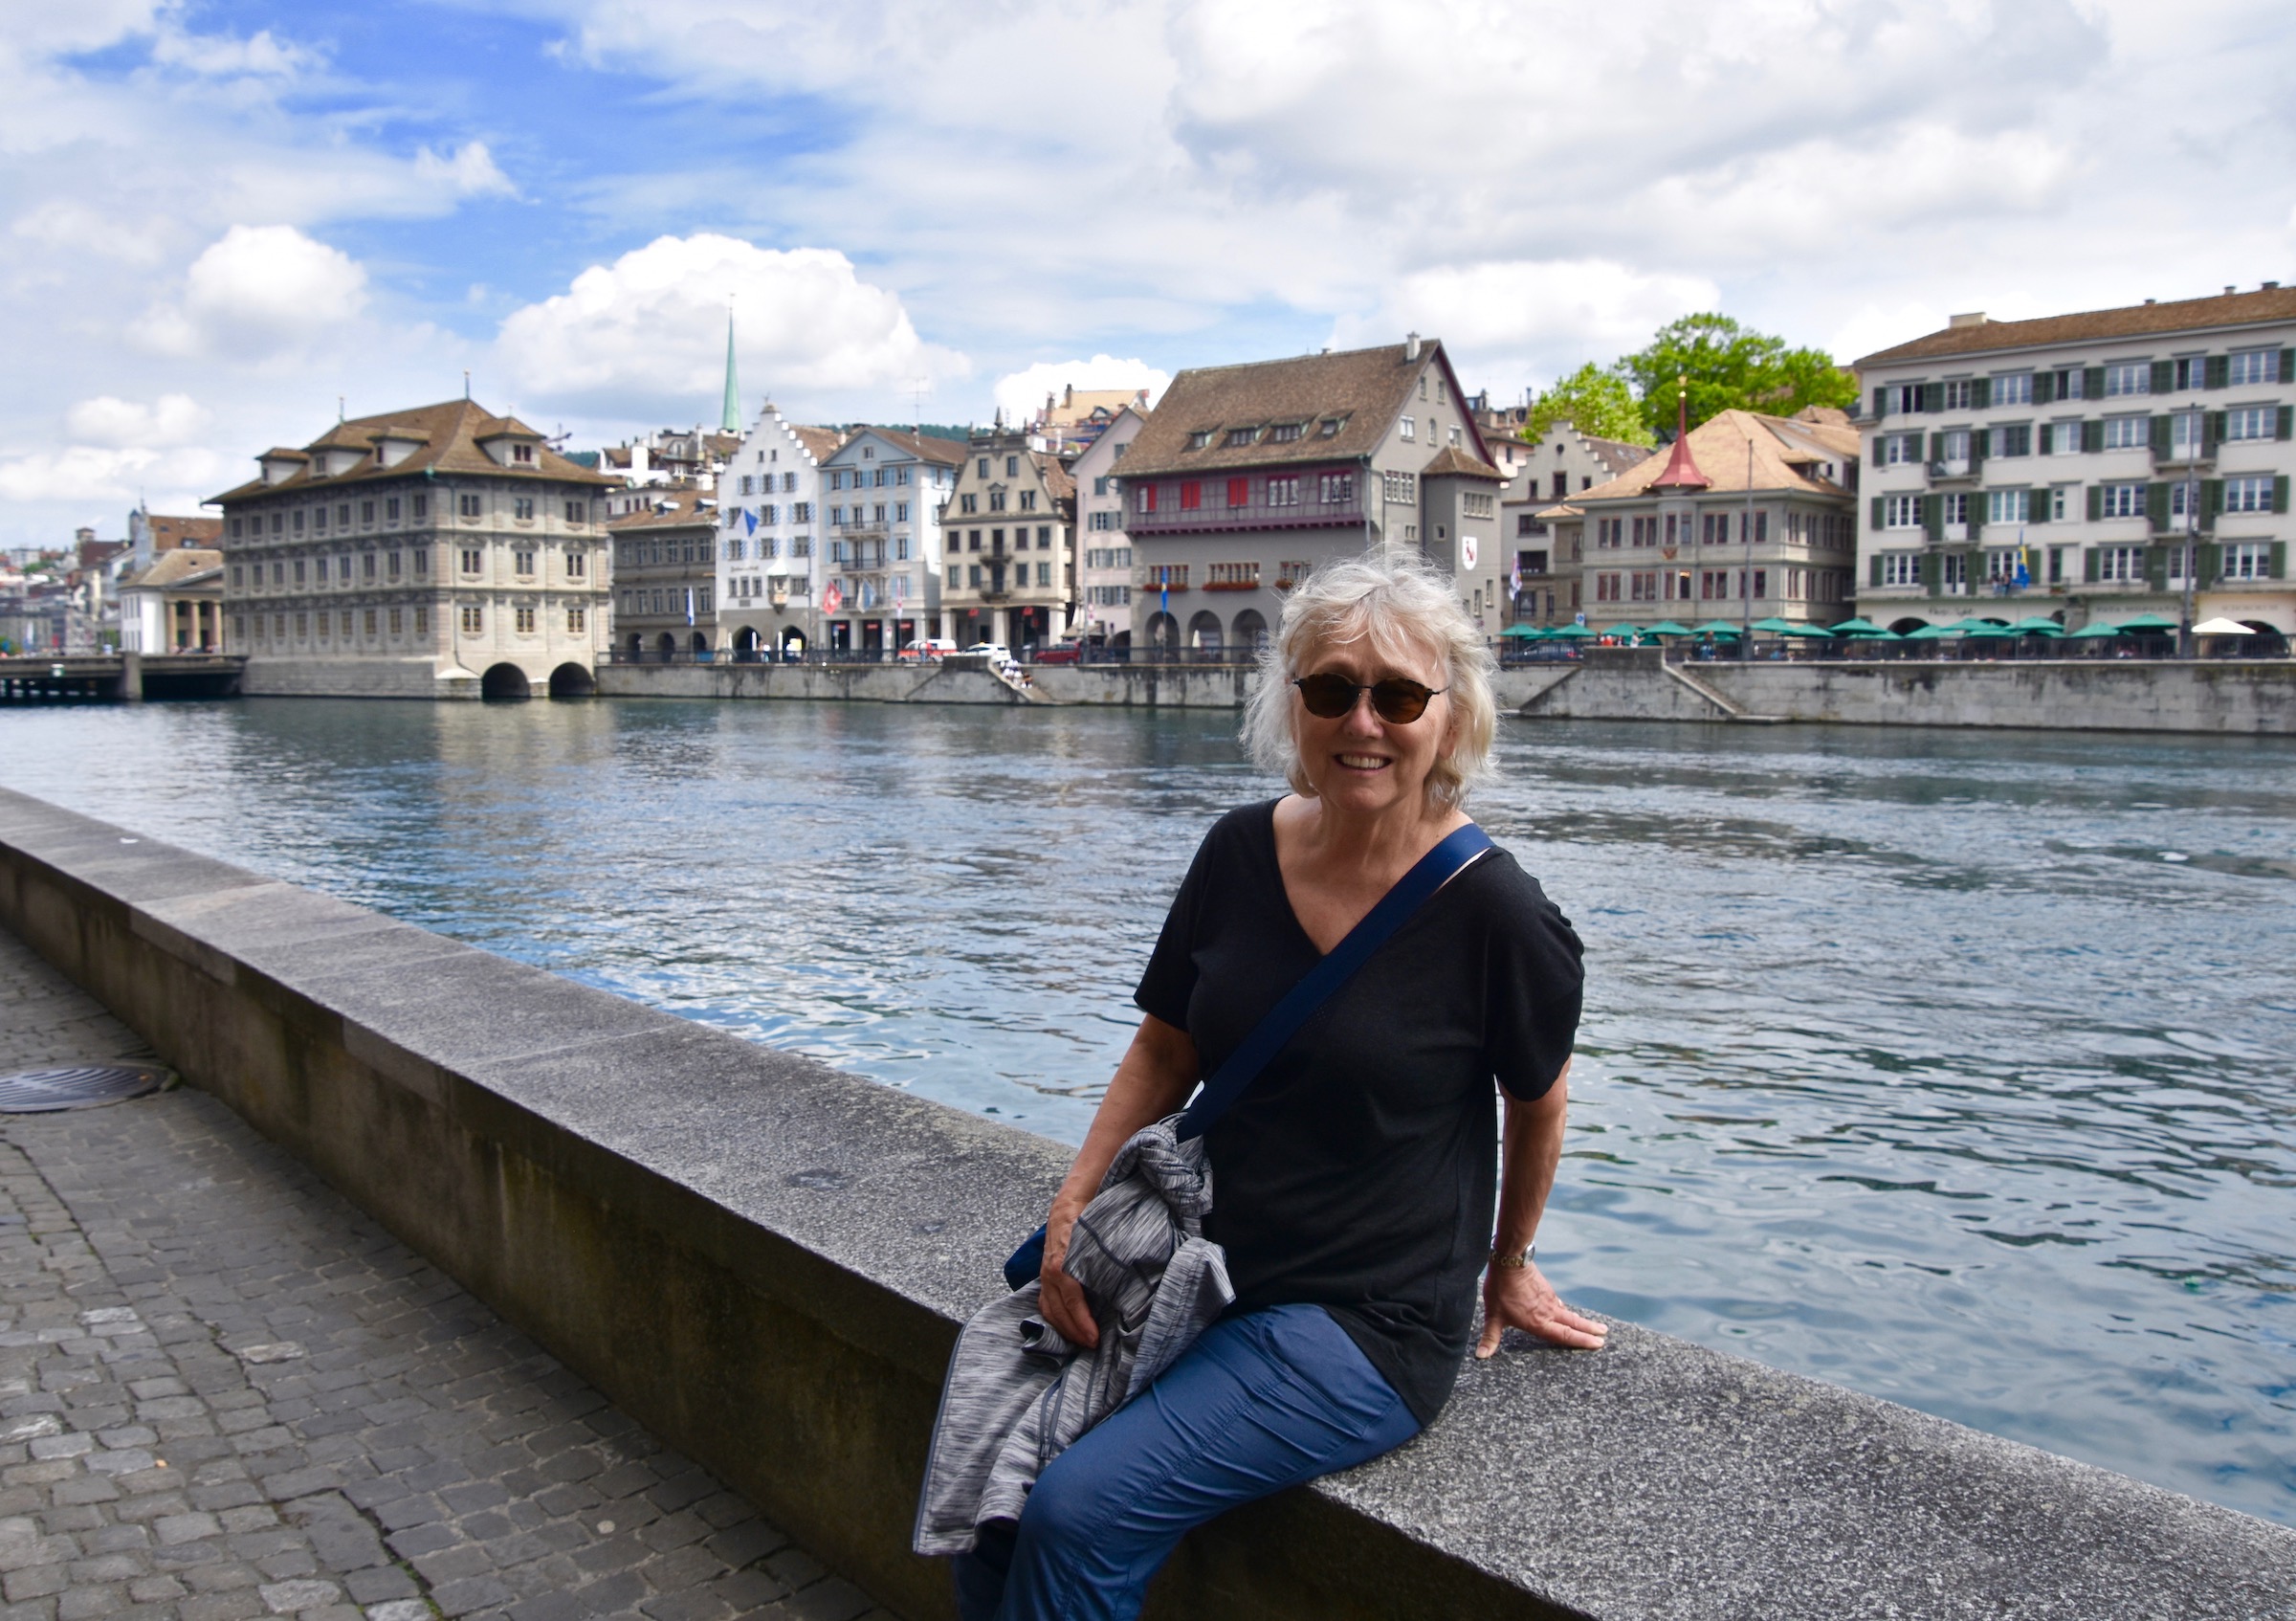 Alison on the Limmat Riverfront, Zurich